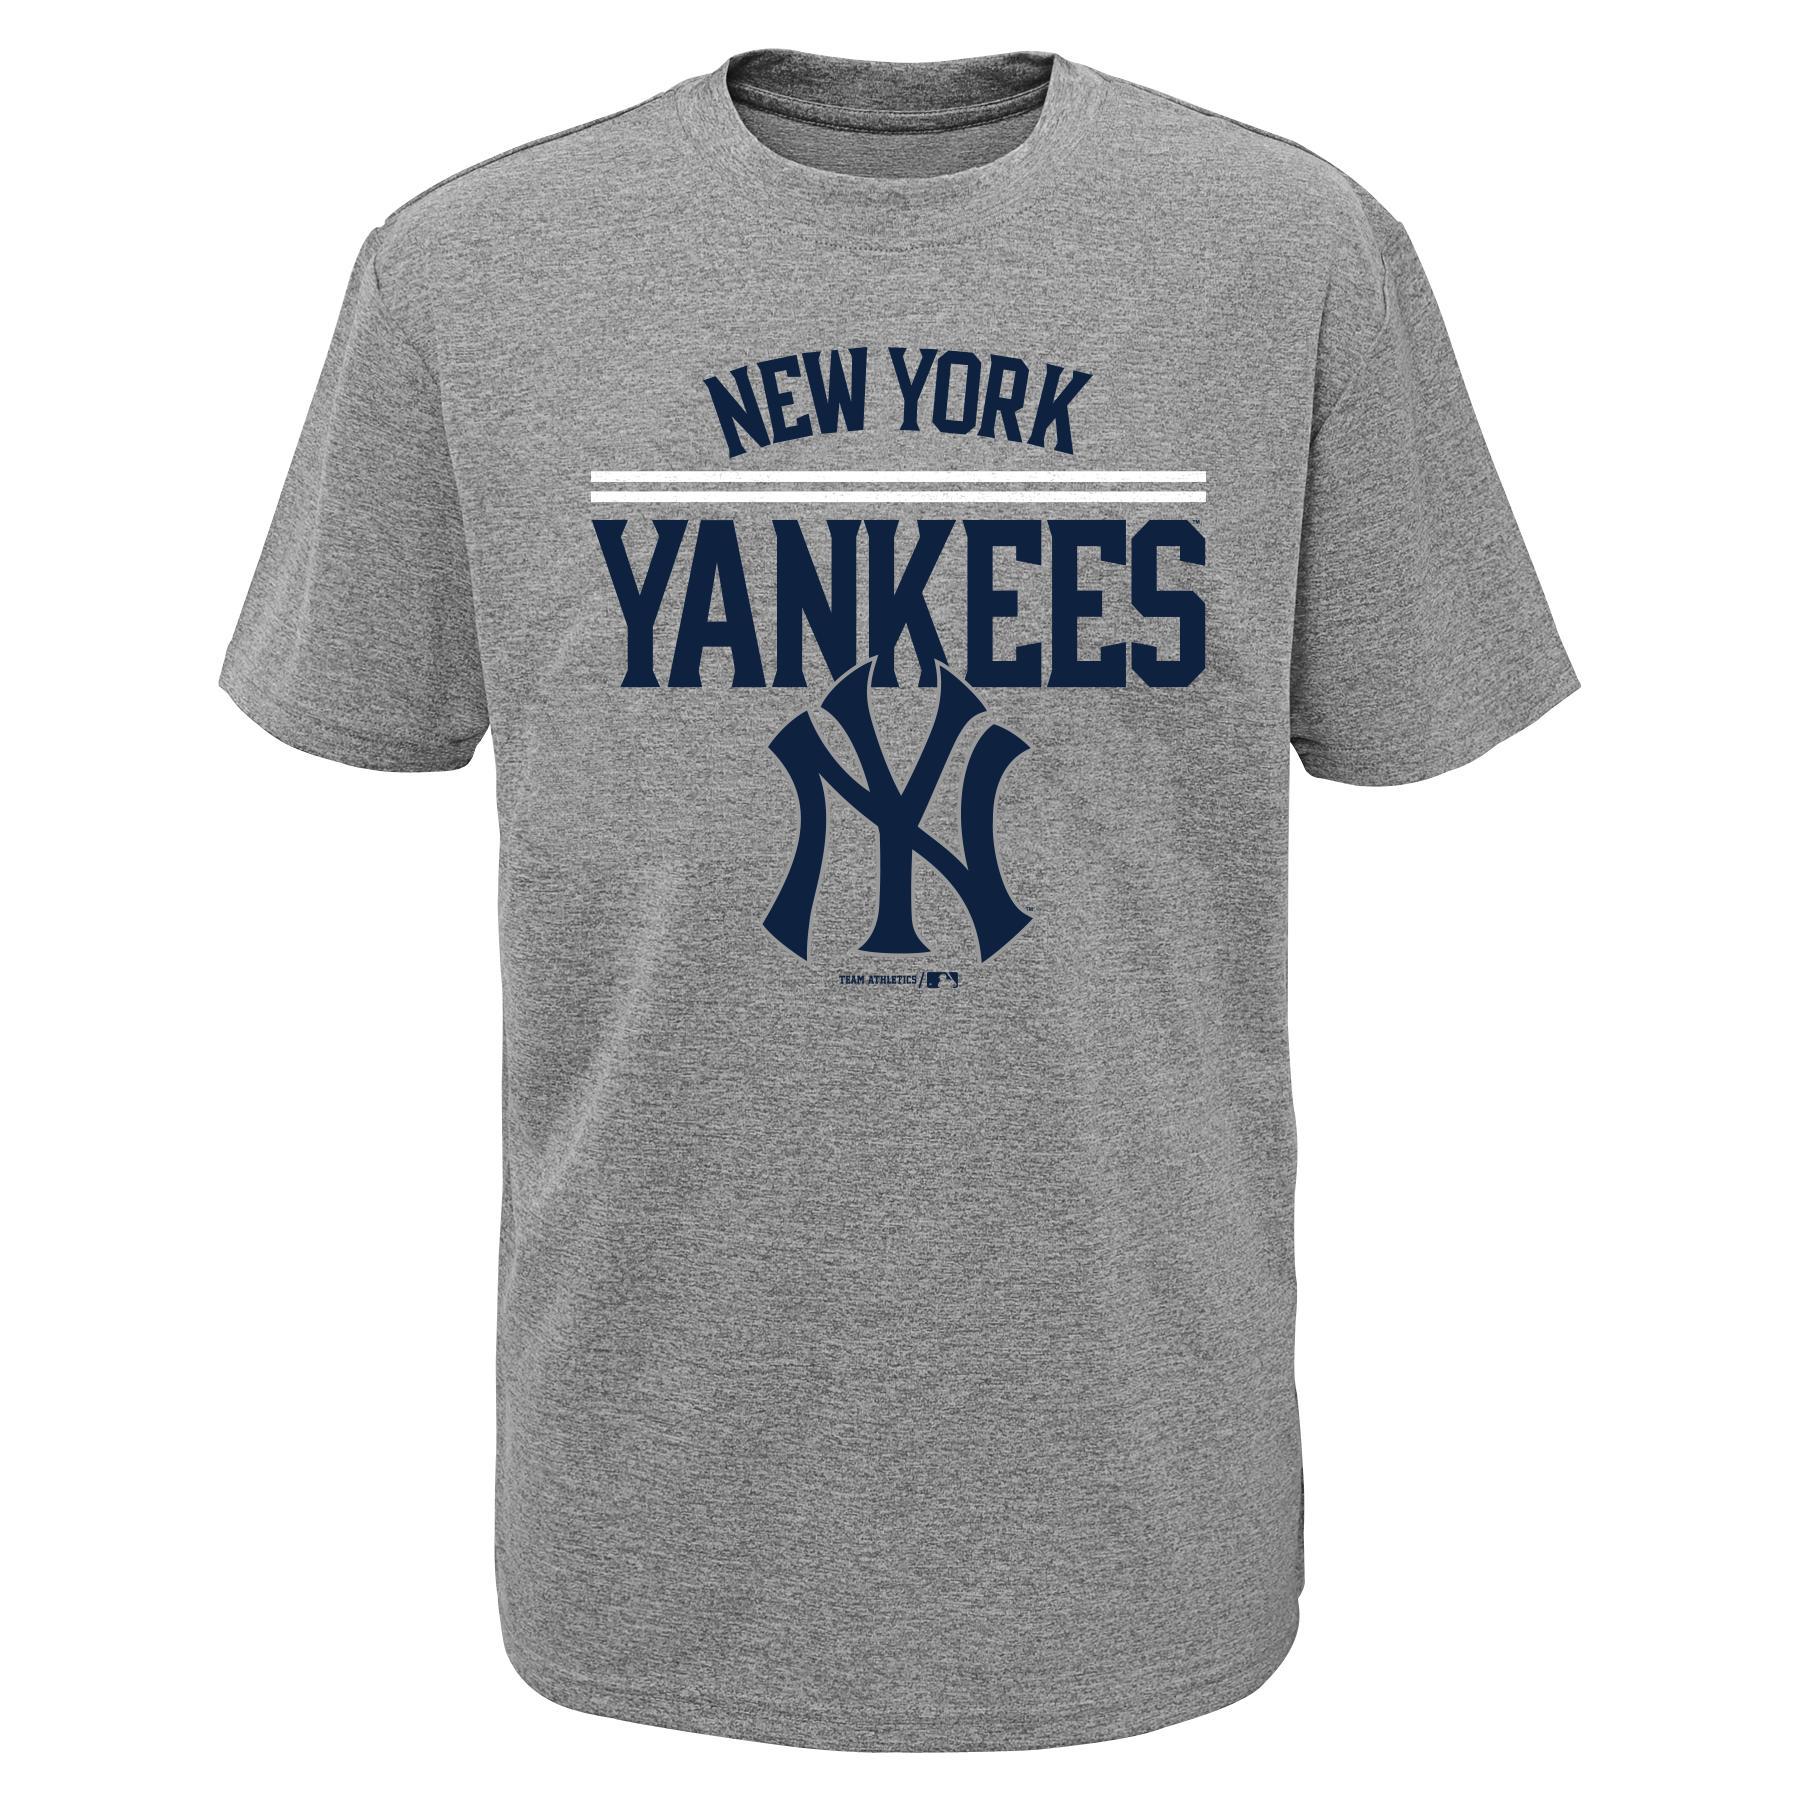 MLB Boys' Graphic T-Shirt - New York Yankees